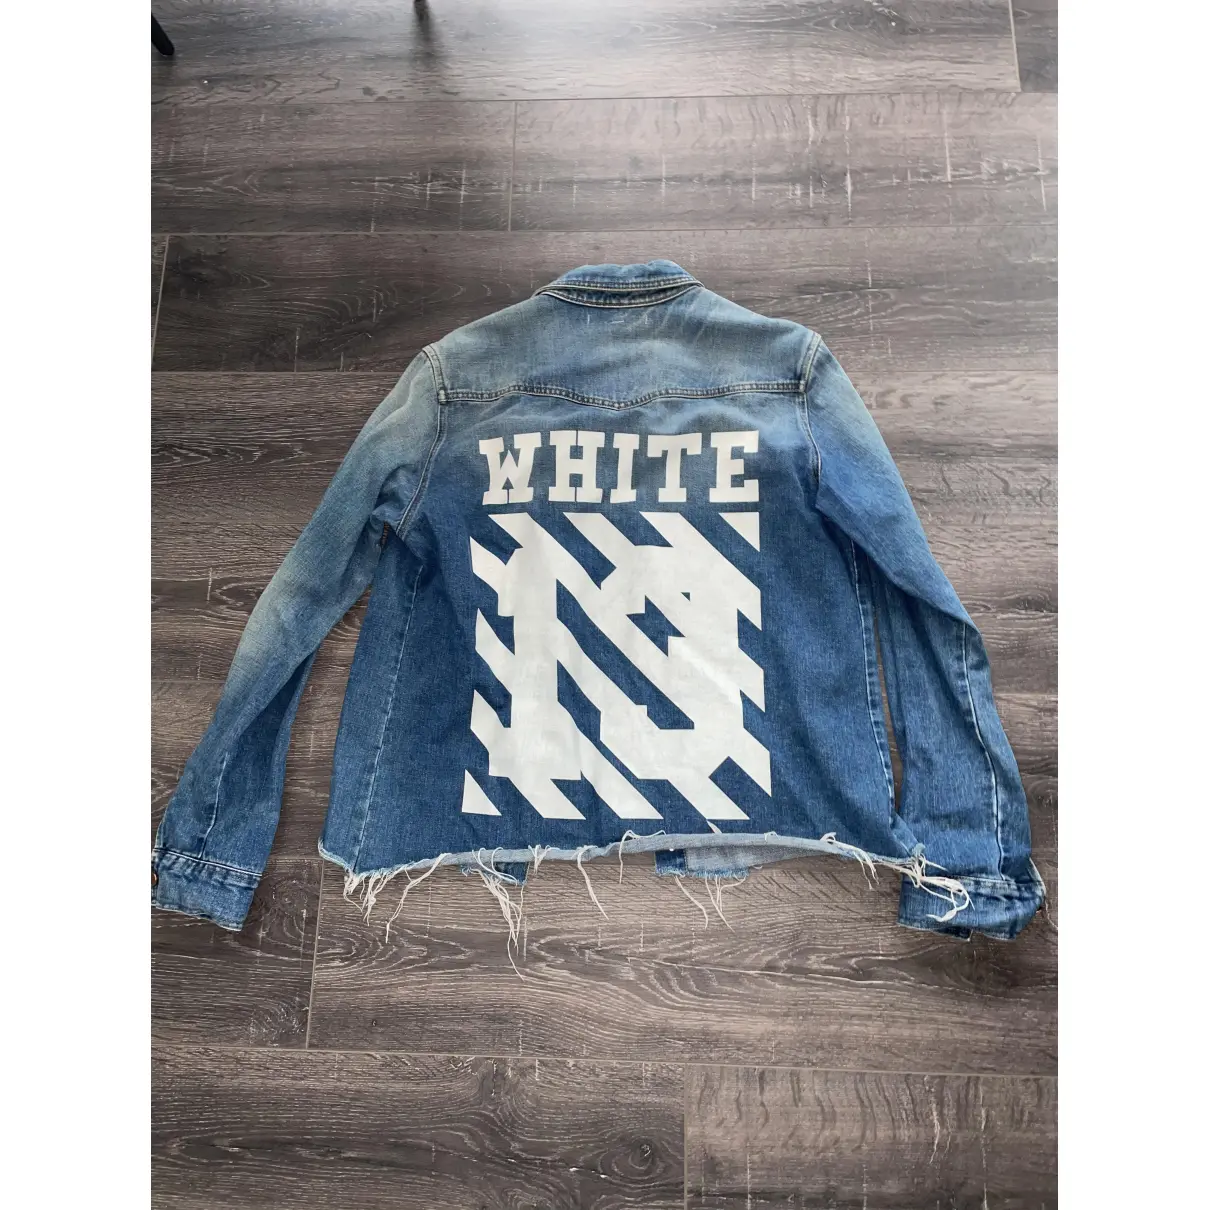 Buy Off-White Jacket online